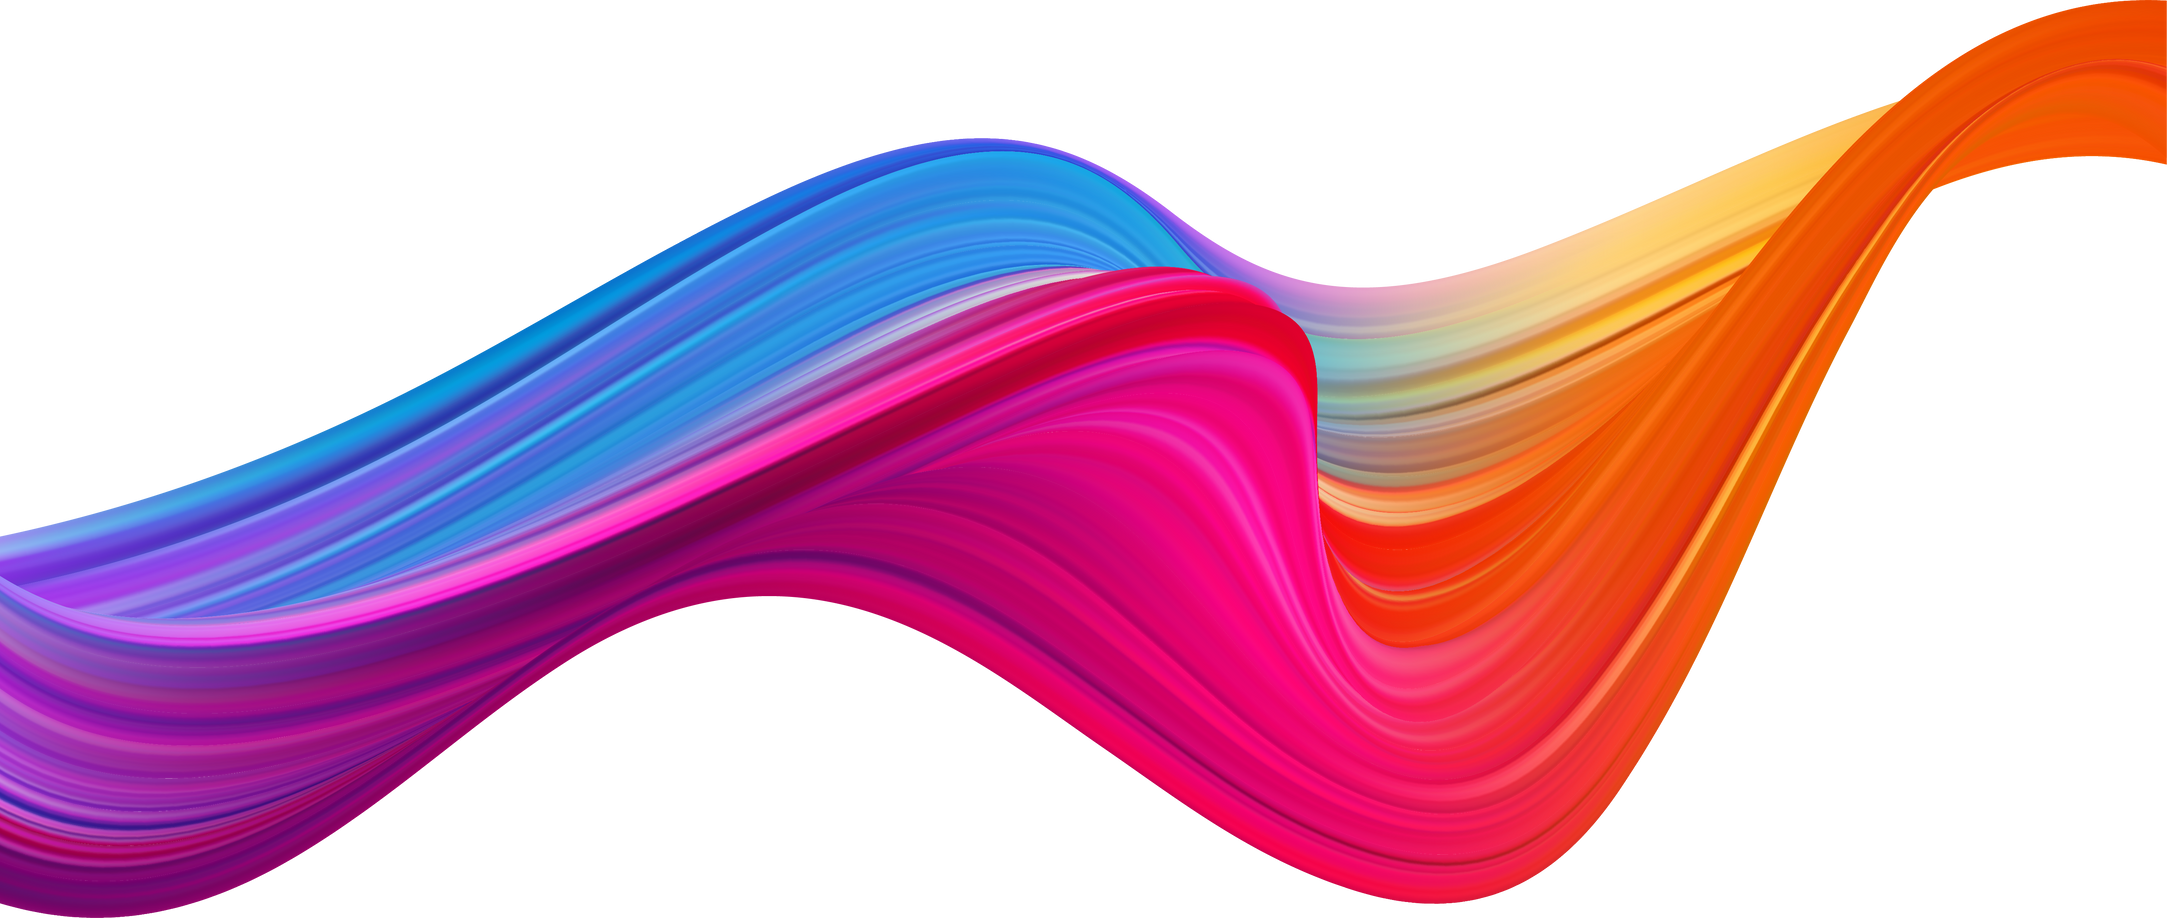 Modern Colorful Flow Poster. Wave Liquid Shape in Color Background. Art Design for Your Design Project. Vector Illustration